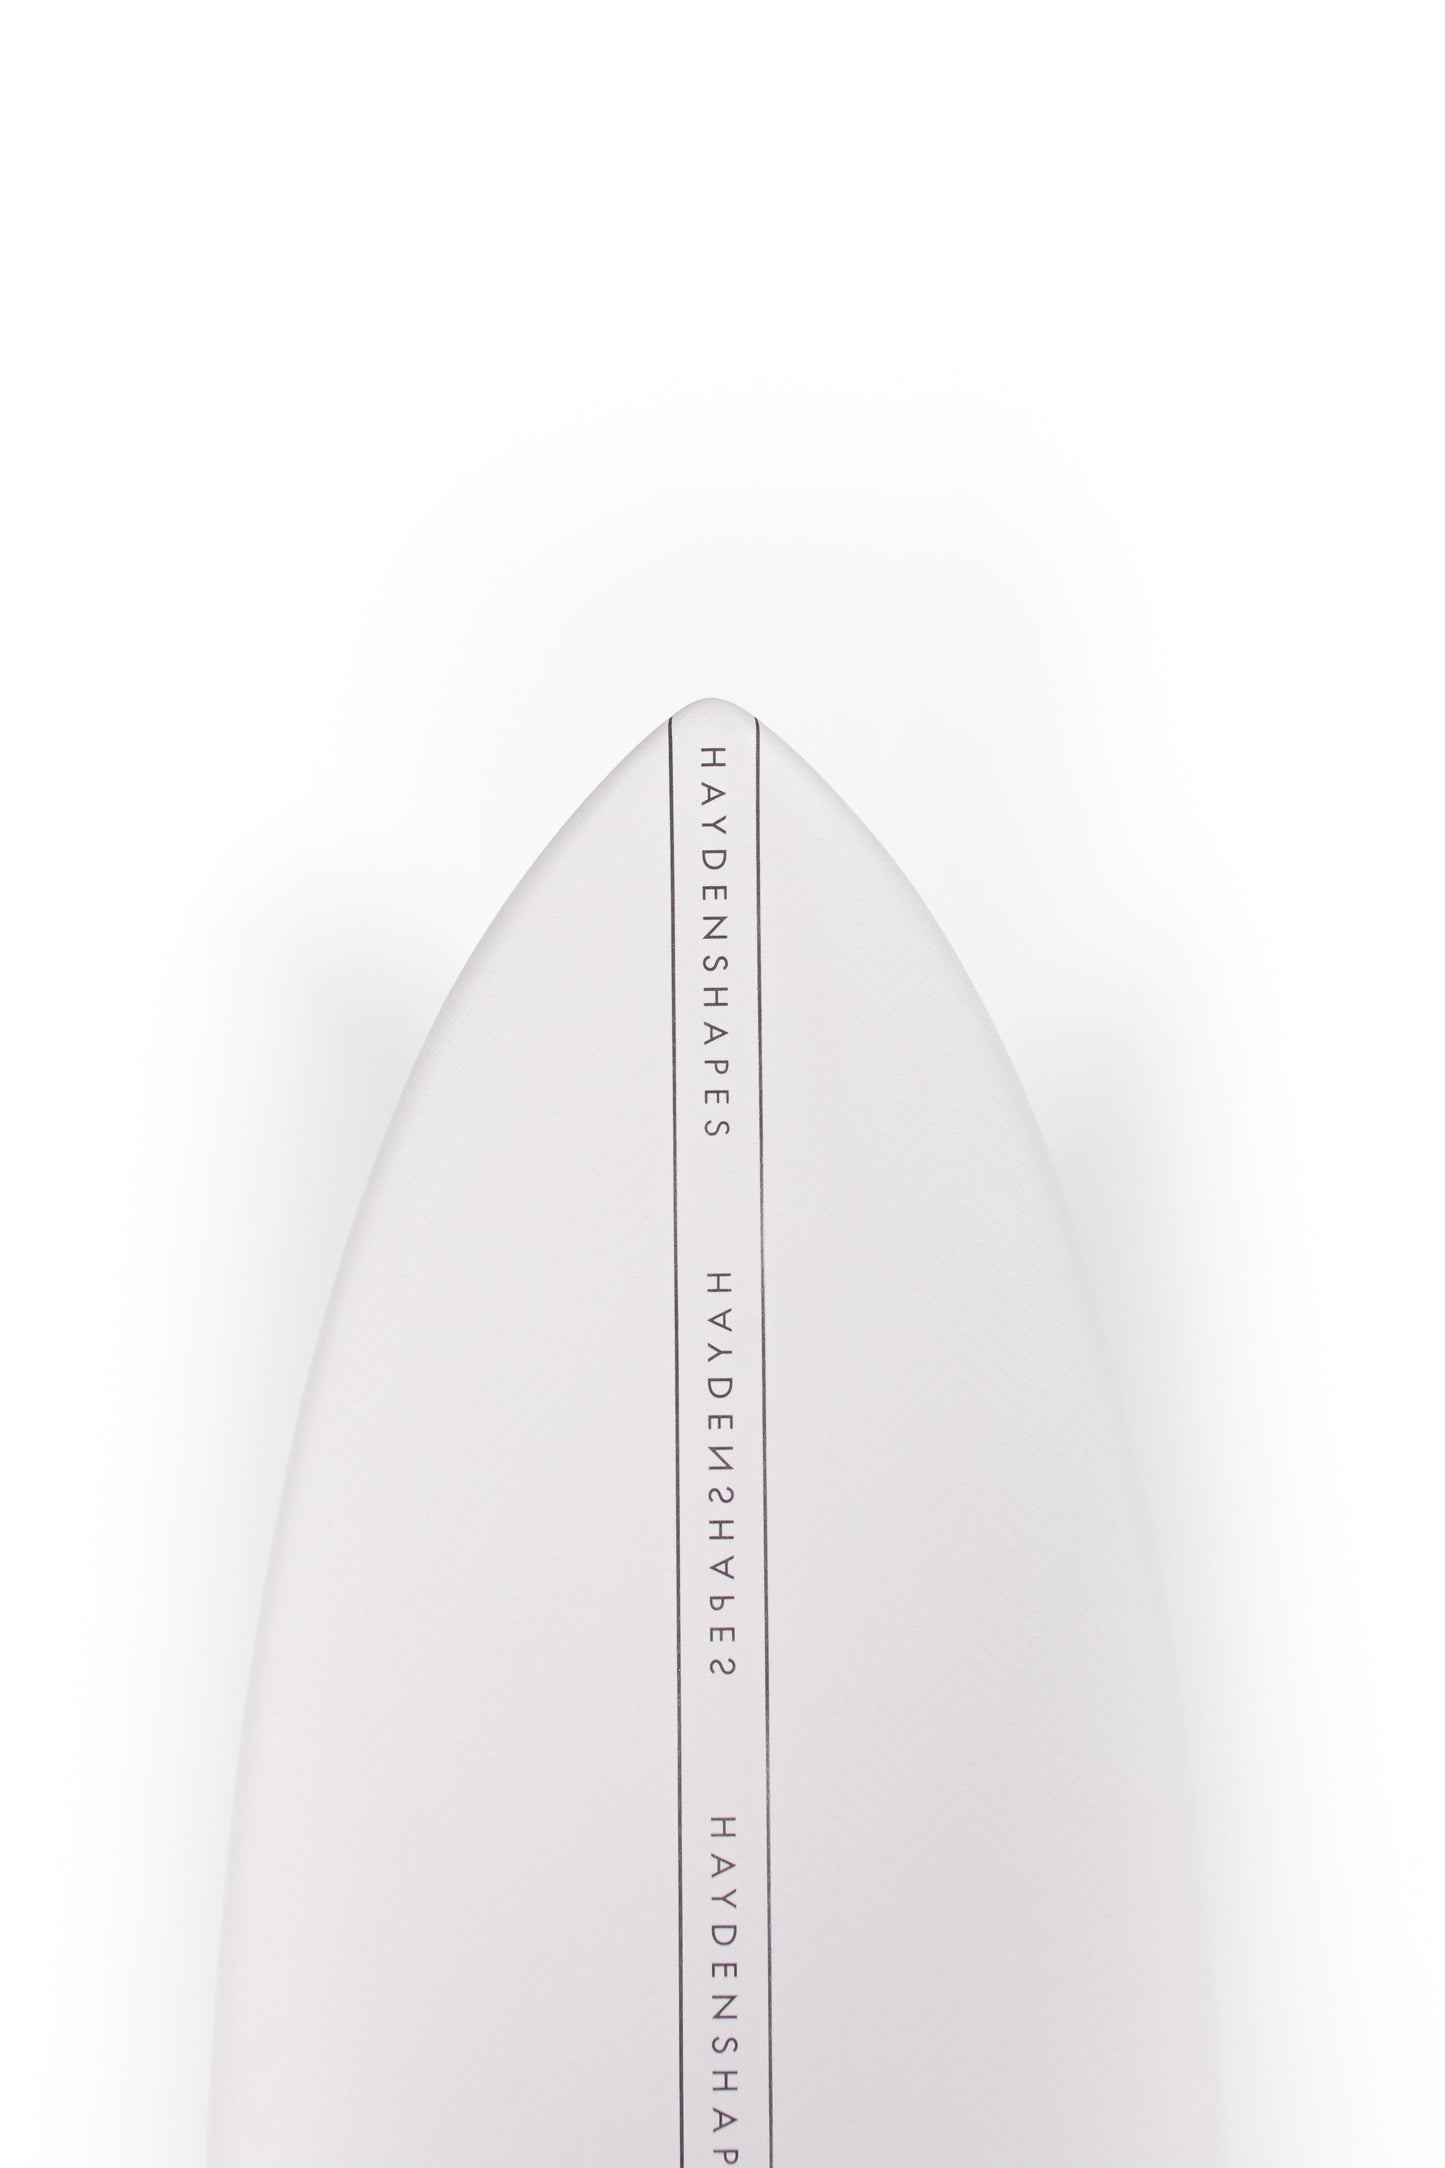 
                  
                    Pukas Surf Shop - HaydenShapes Surfboard - HYPTO KRYPTO SOFT - 6'4" x 21" x 3" x 45.16L - SOFTHK-DUST-FU
                  
                